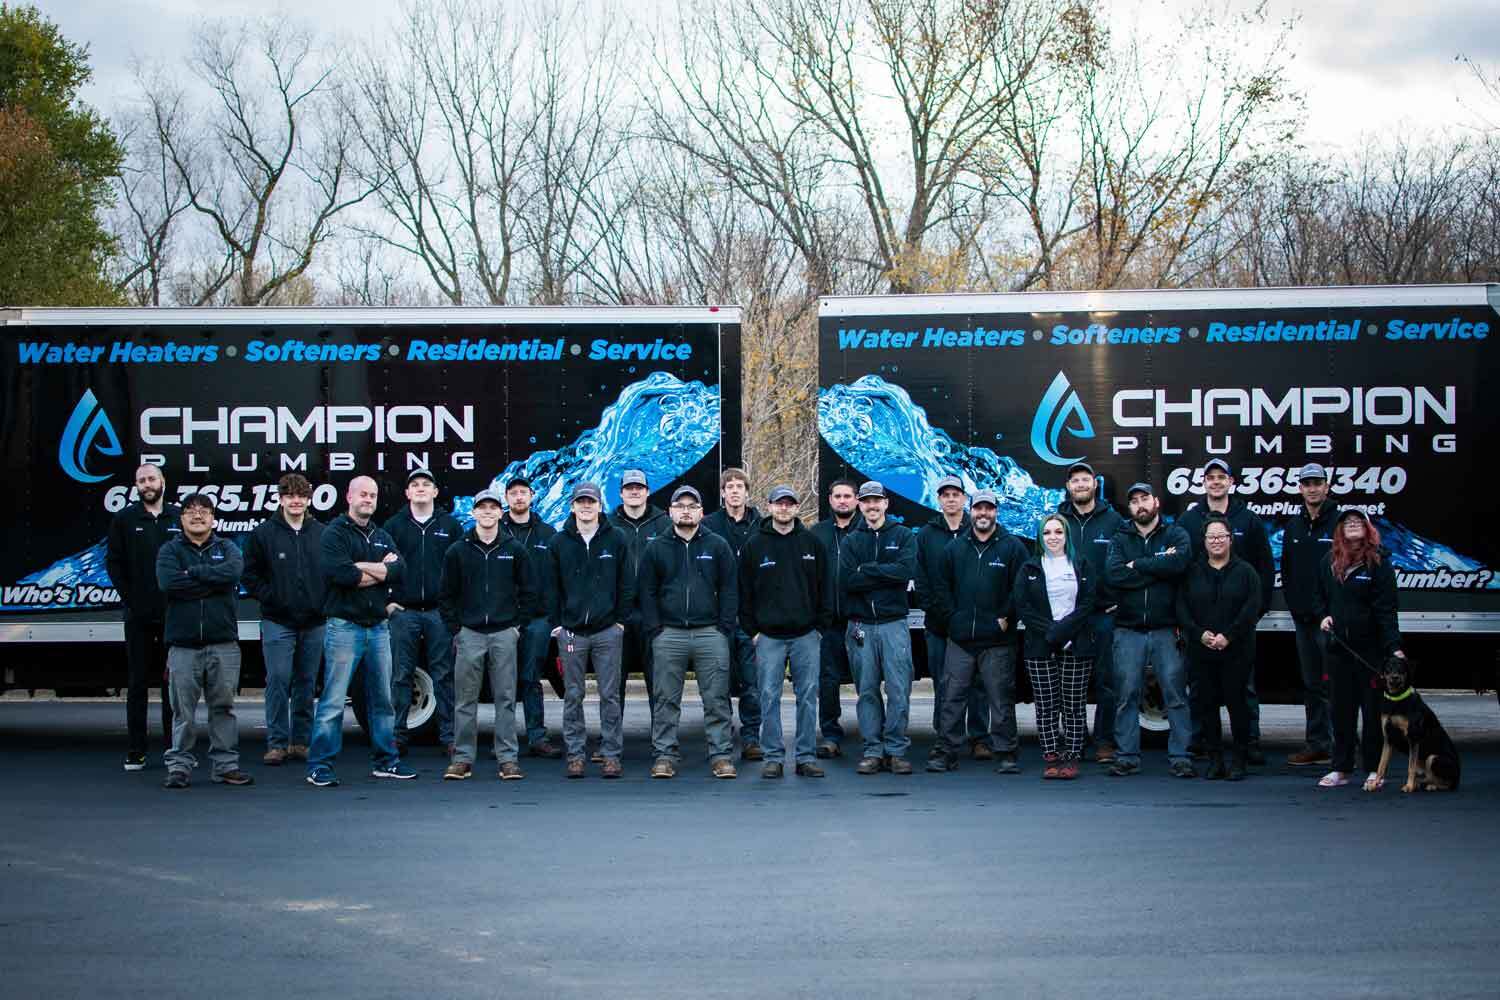 Champion plumbing team in front of trucks